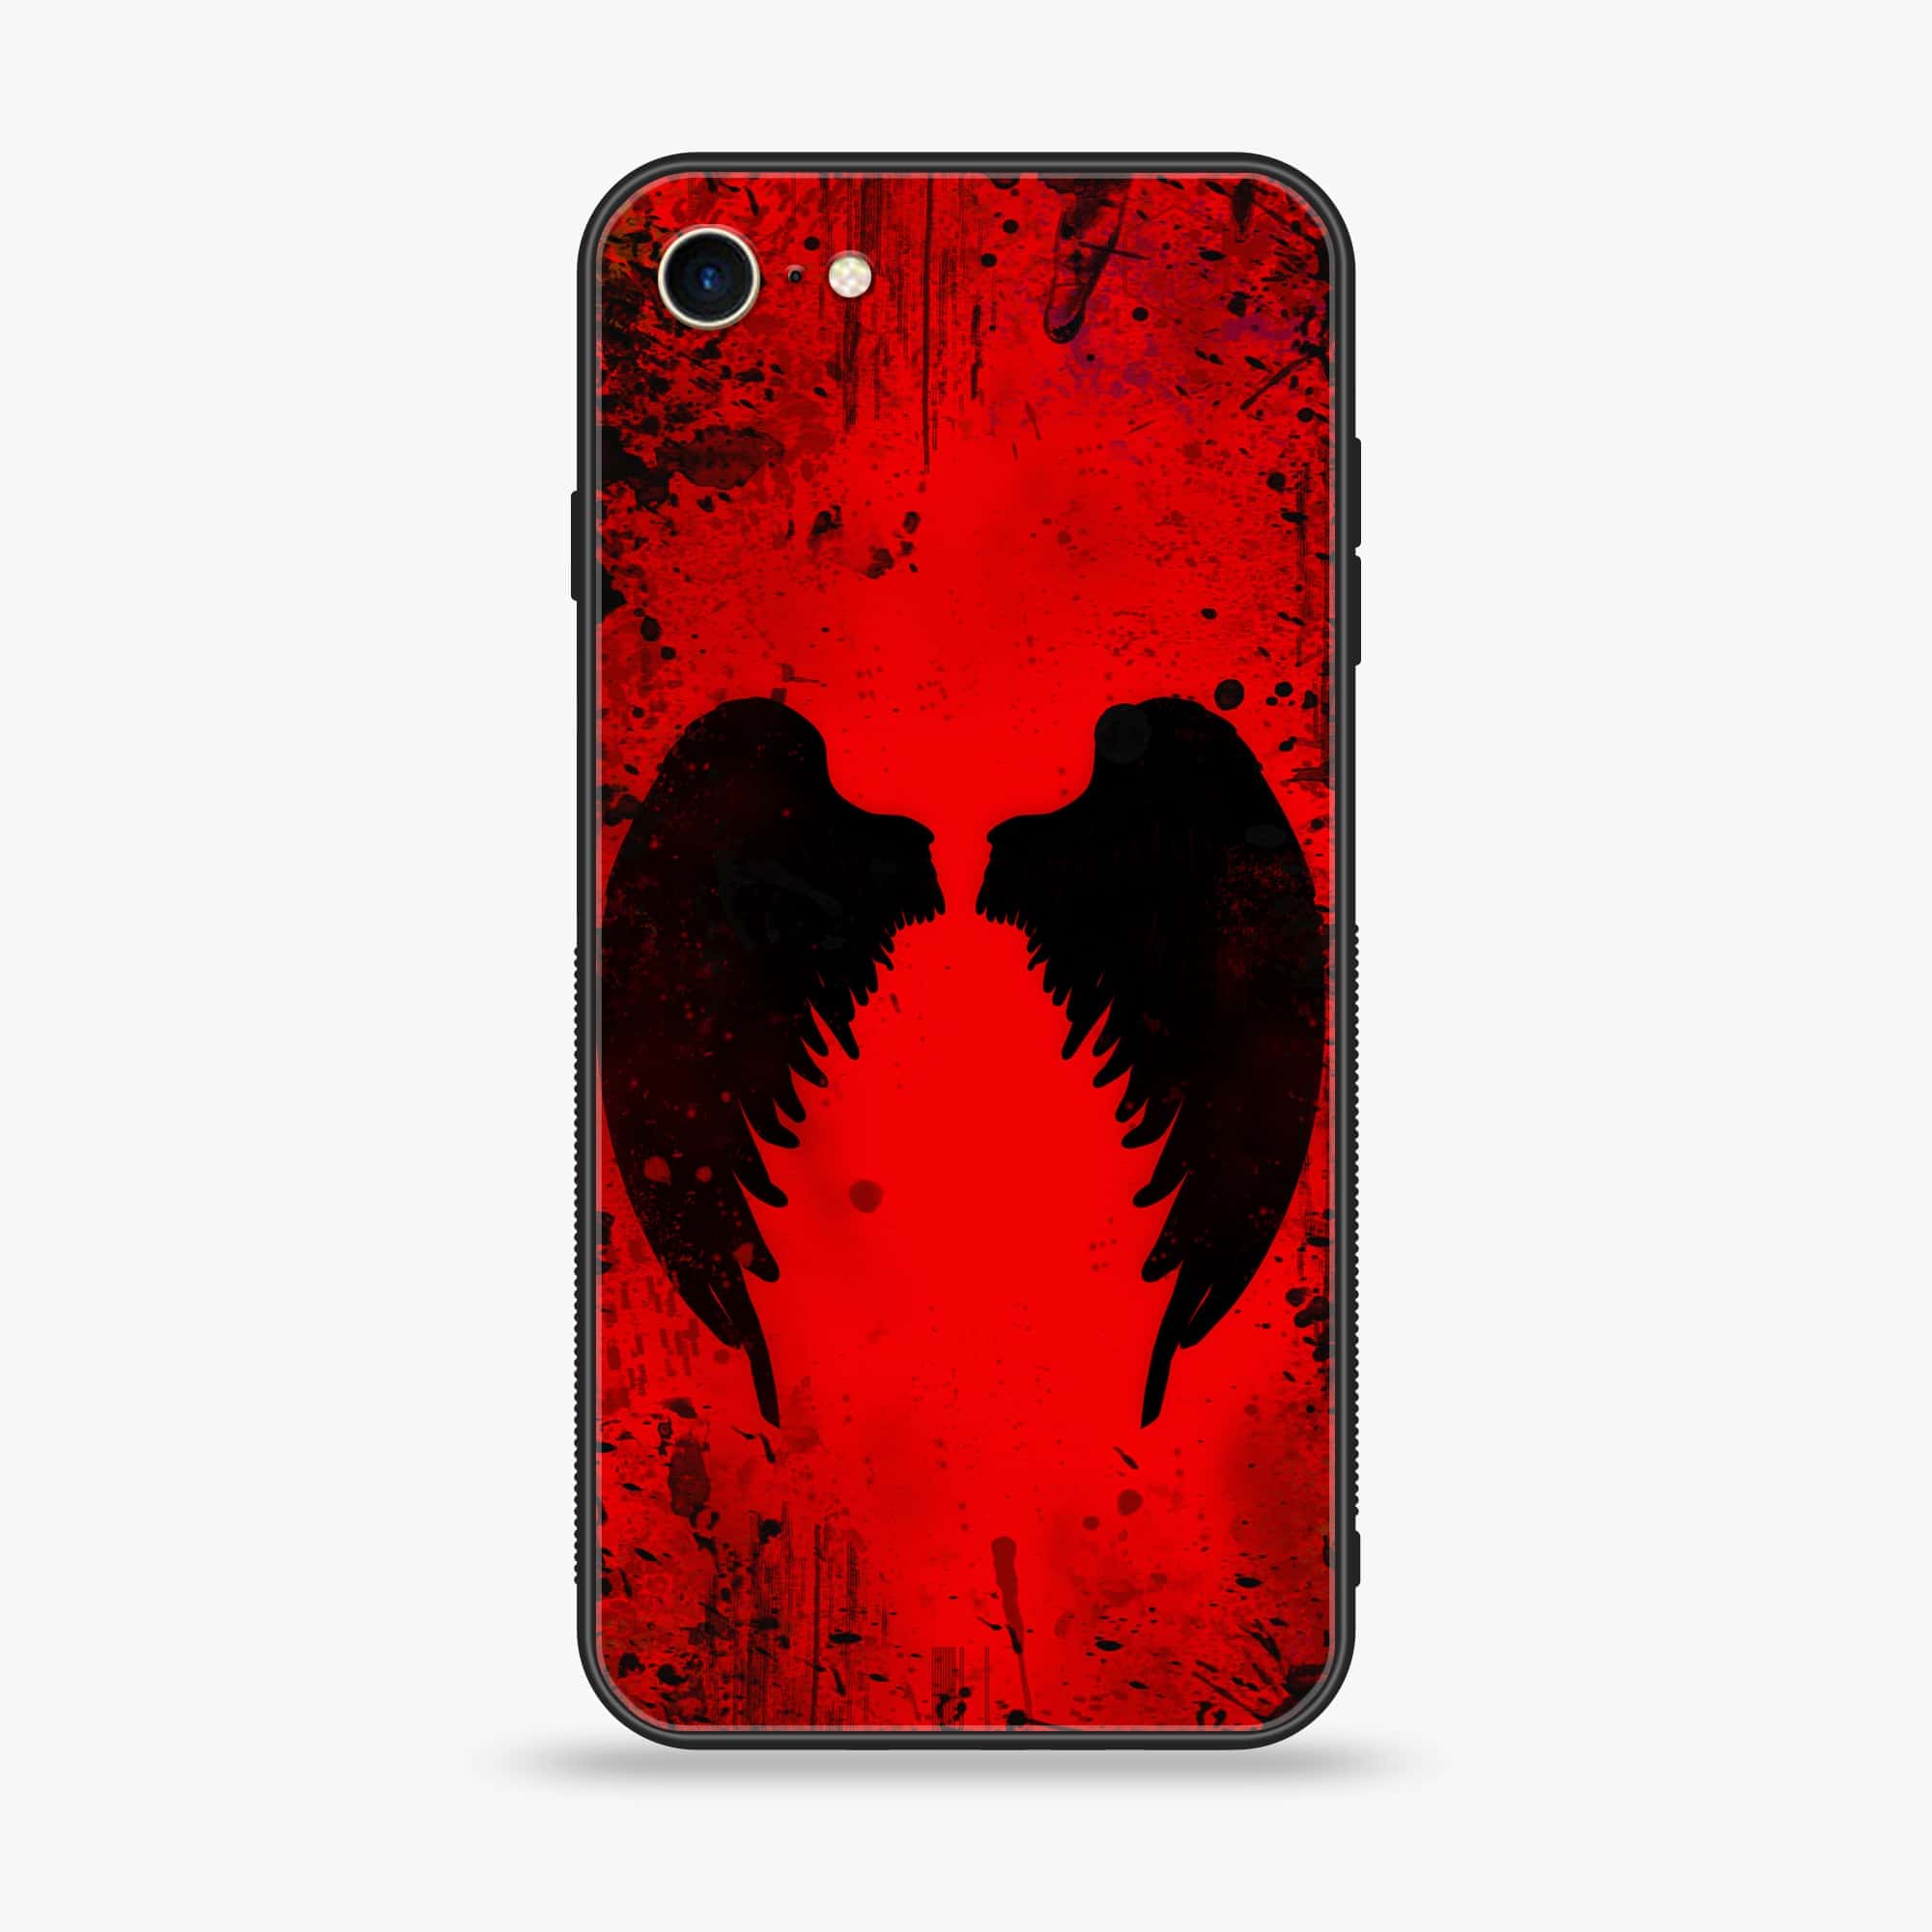 iPhone 6Plus - Angel Wings 2.0 Series - Premium Printed Glass soft Bumper shock Proof Case